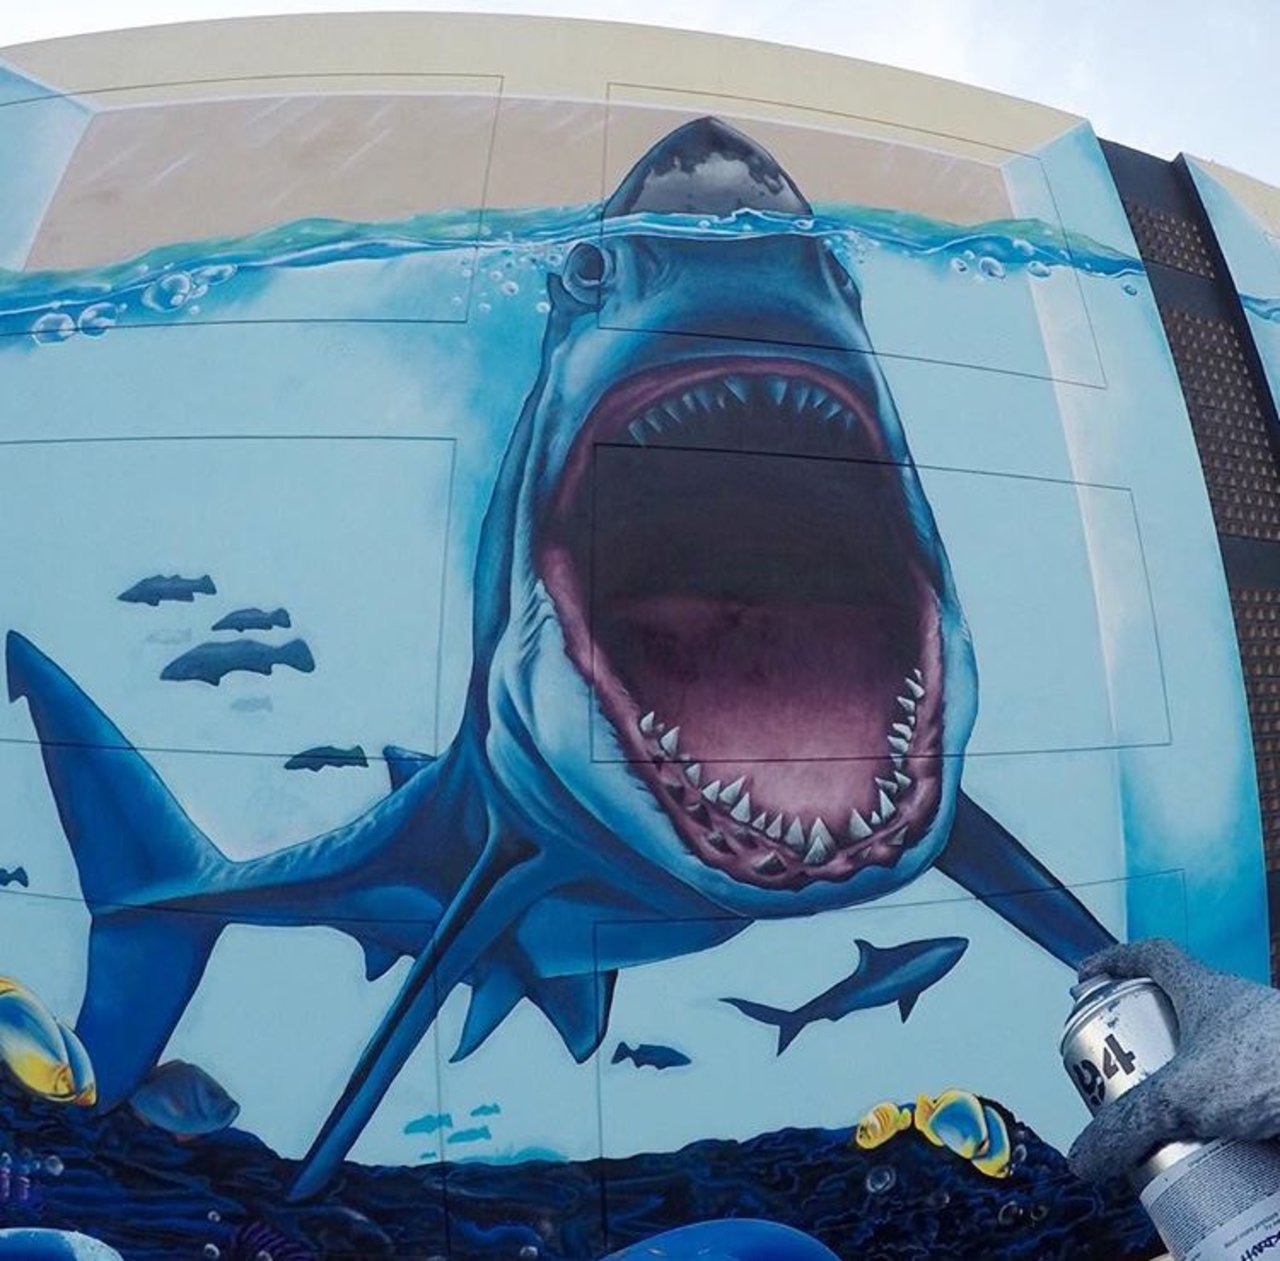 RT GoogleStreetArt: 'Shark Attack' New Street Art by Pakey One #art #mural #graffiti #streetart https://t.co/0LI2cWLi5u